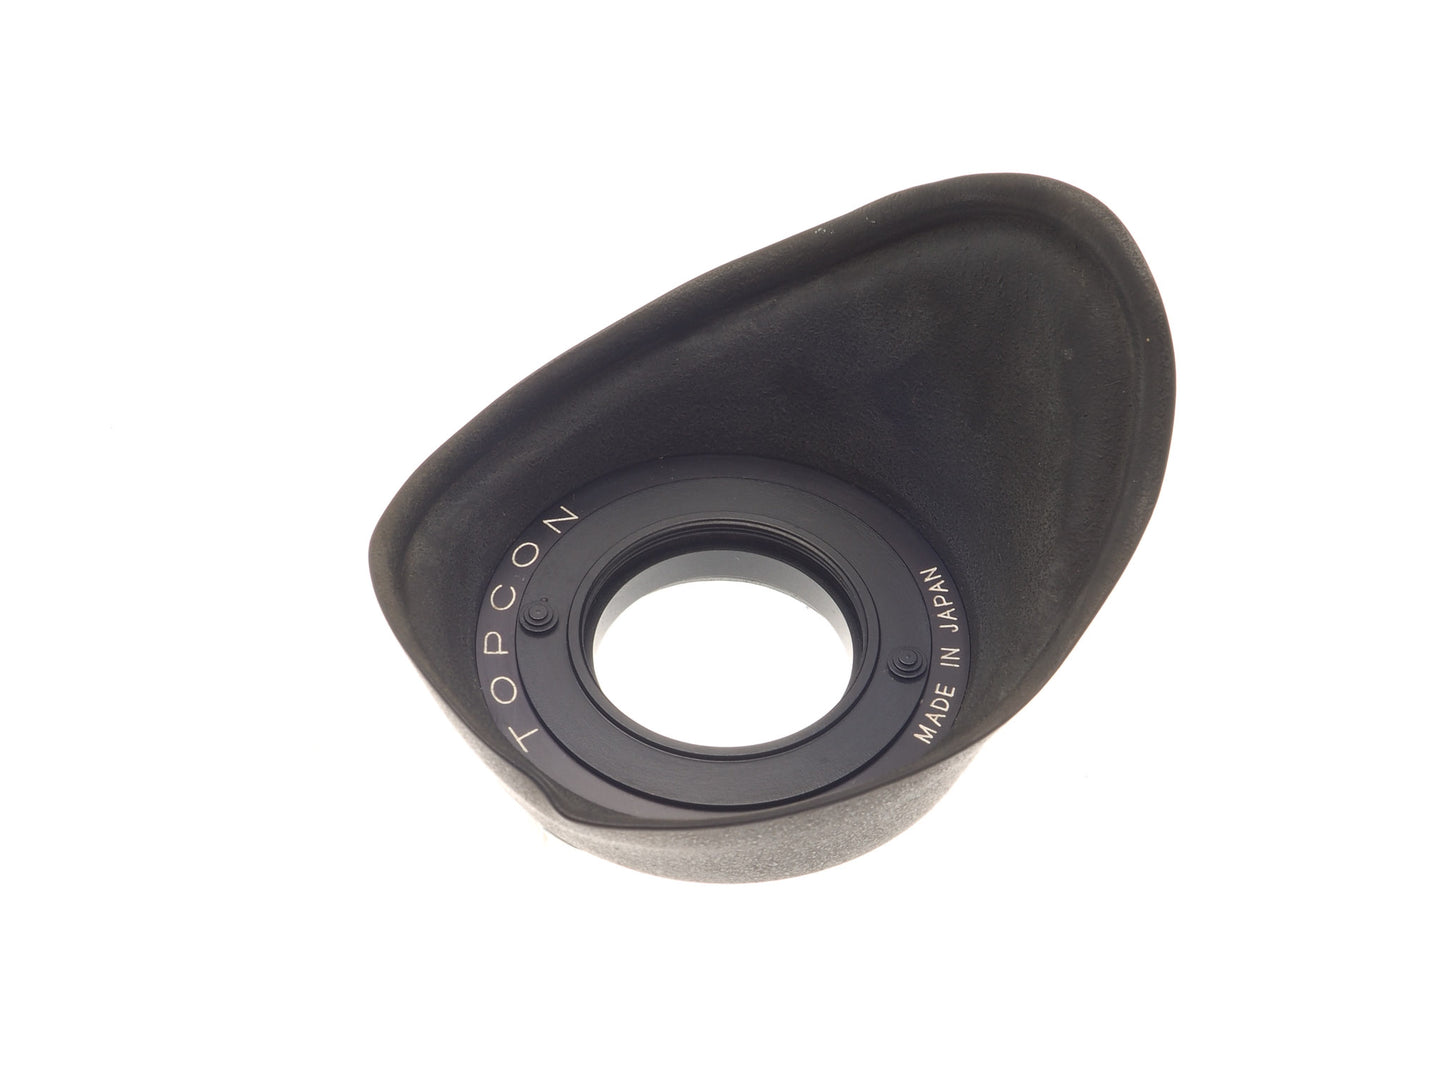 Topcon Rubber Eyecup Model 3 - Accessory